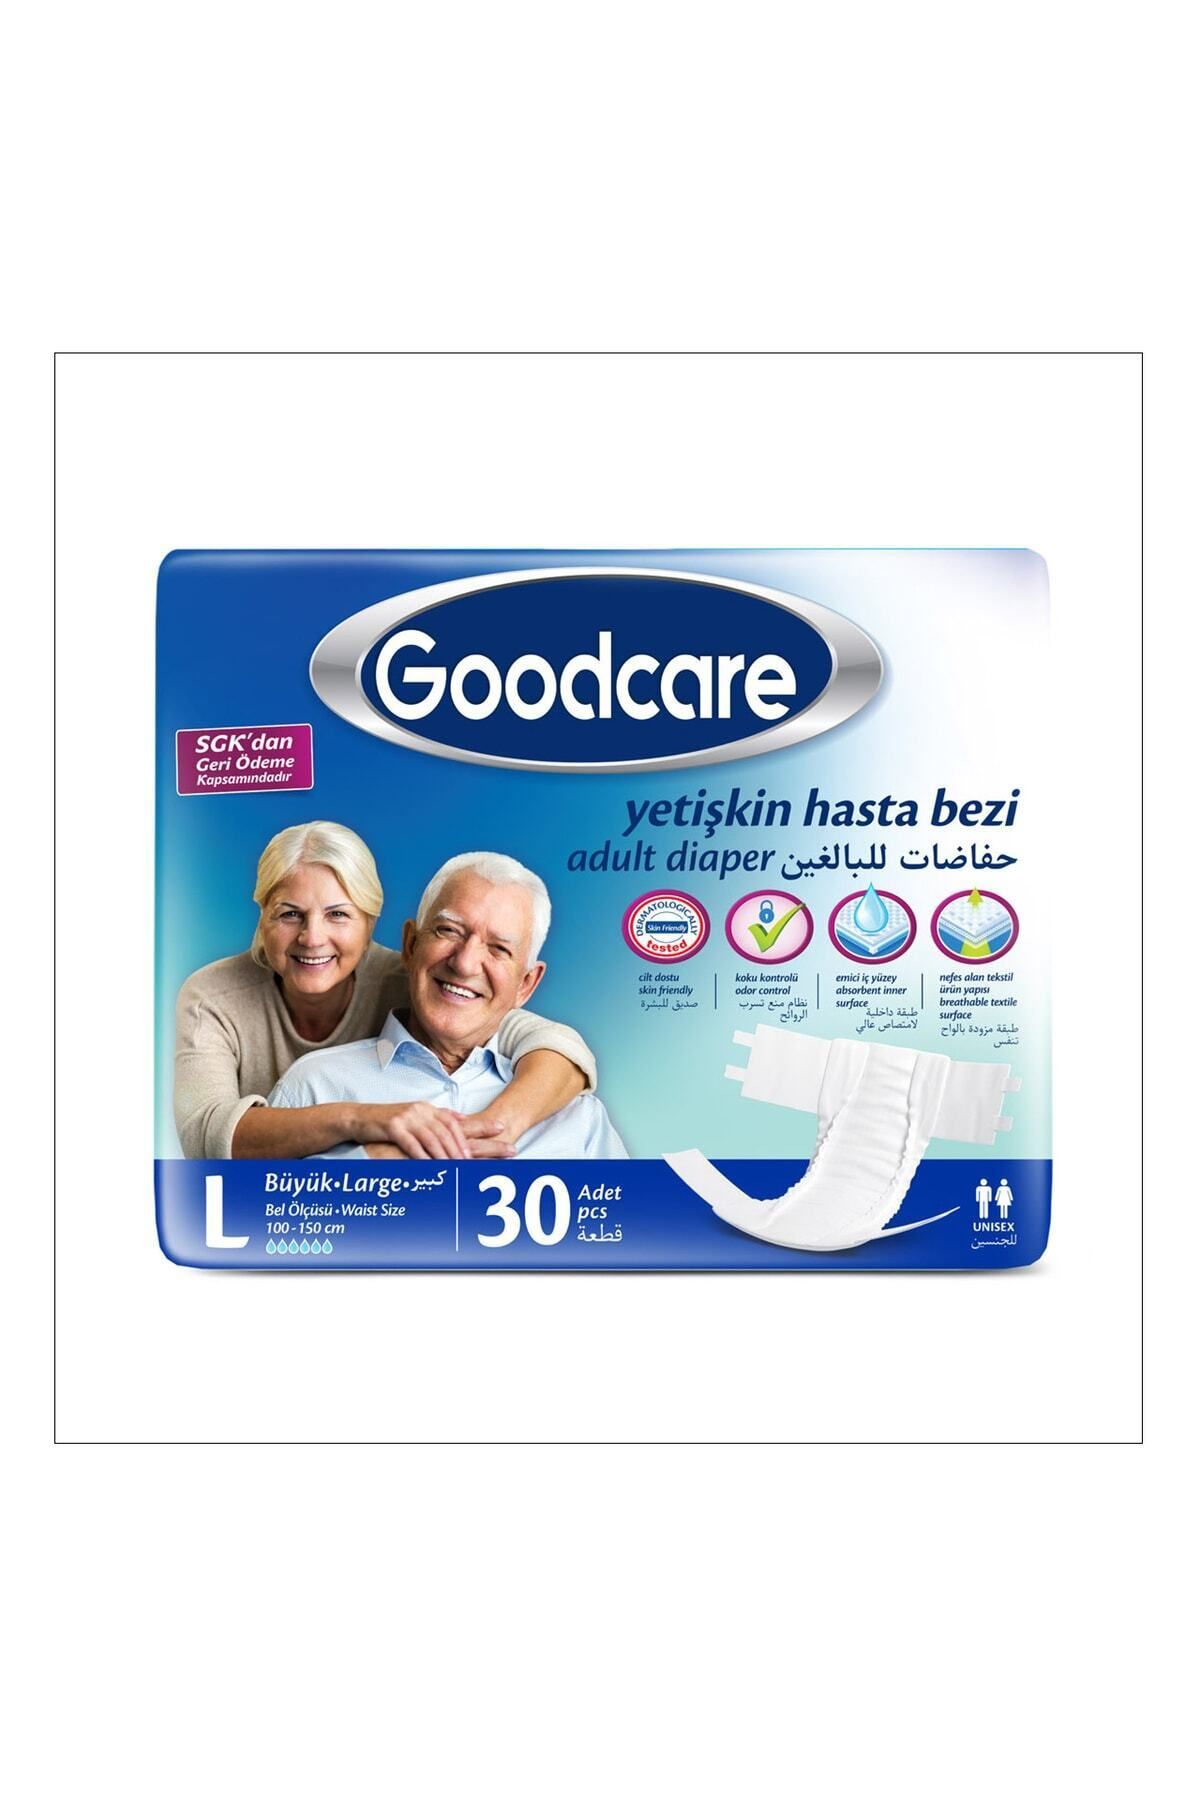 Goodcare L Belbantlı Yetişkin Hasta Bezi L 30 Lu